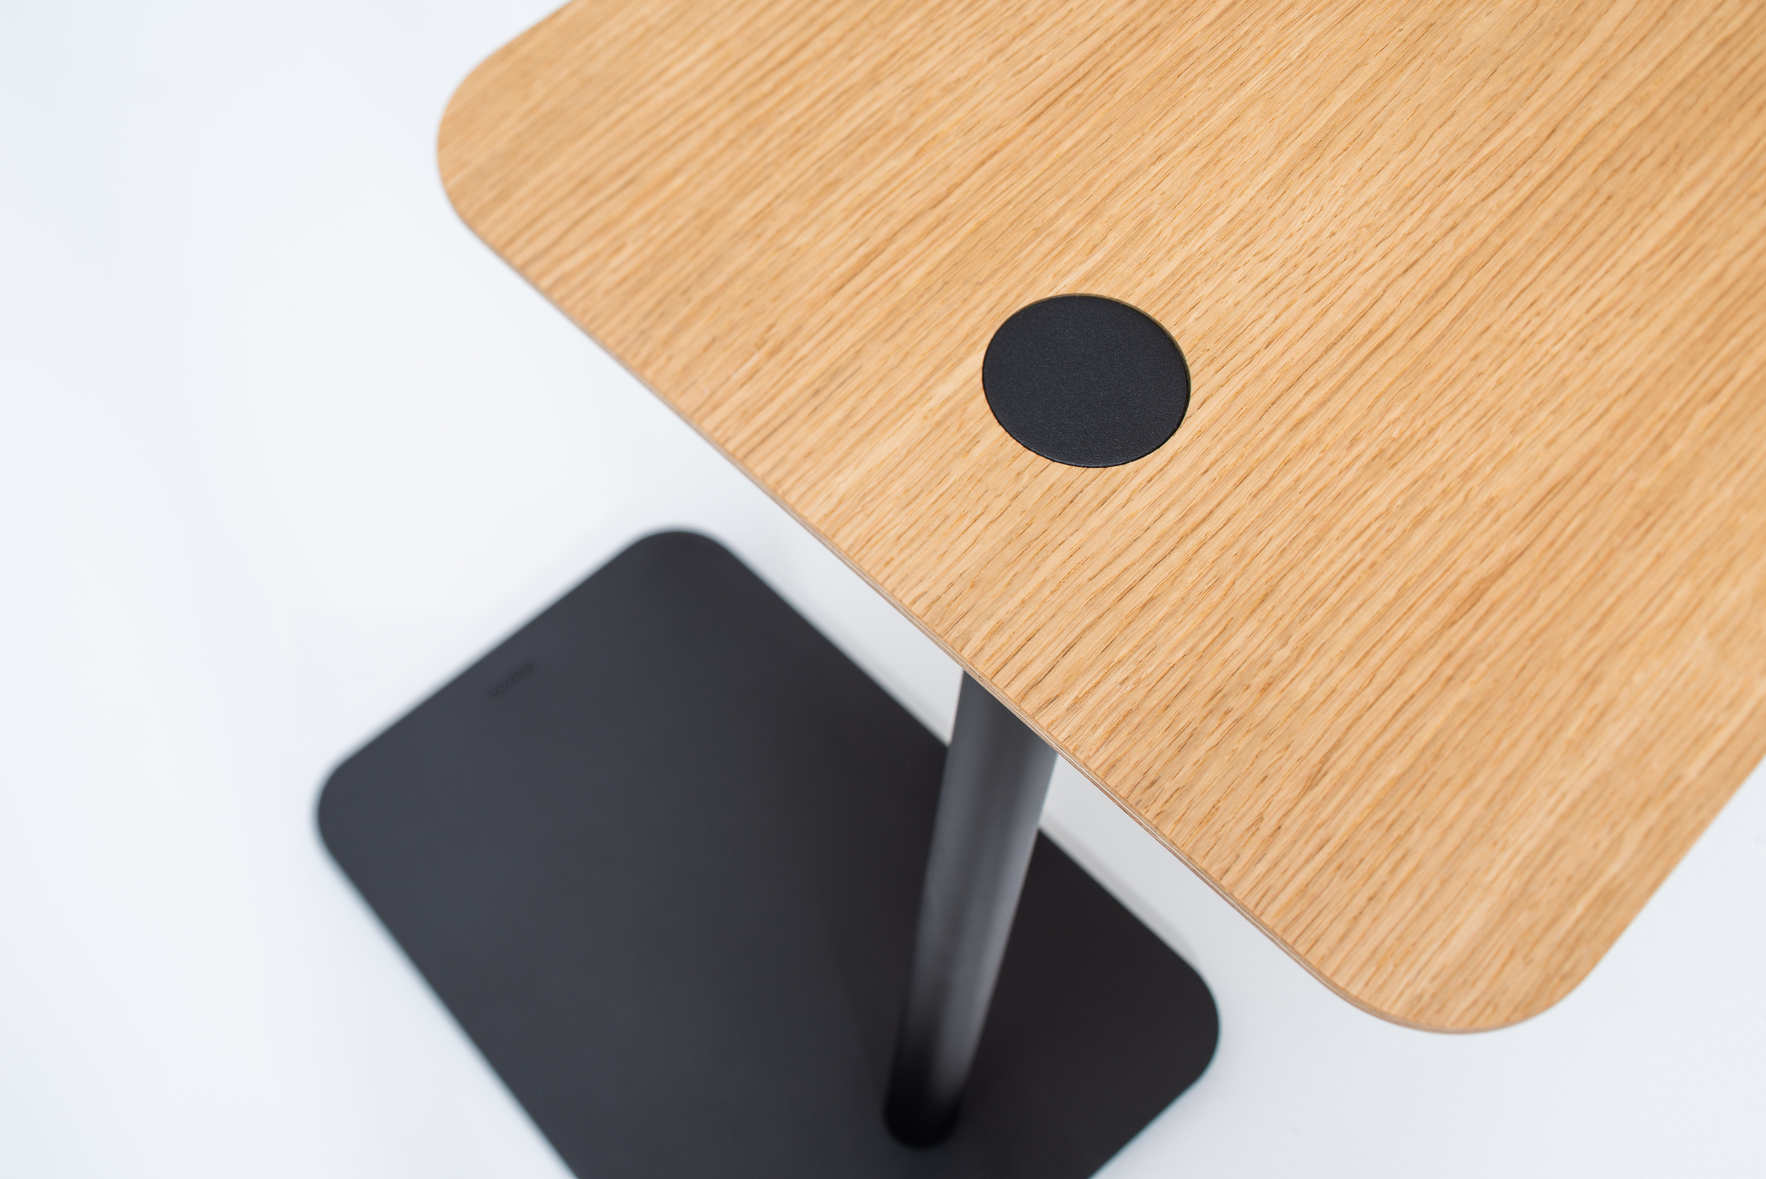 loop-side-table-veneer-oak-natural-lacquer-lua468-powder-coated-steel-black-matte-9005-d-1